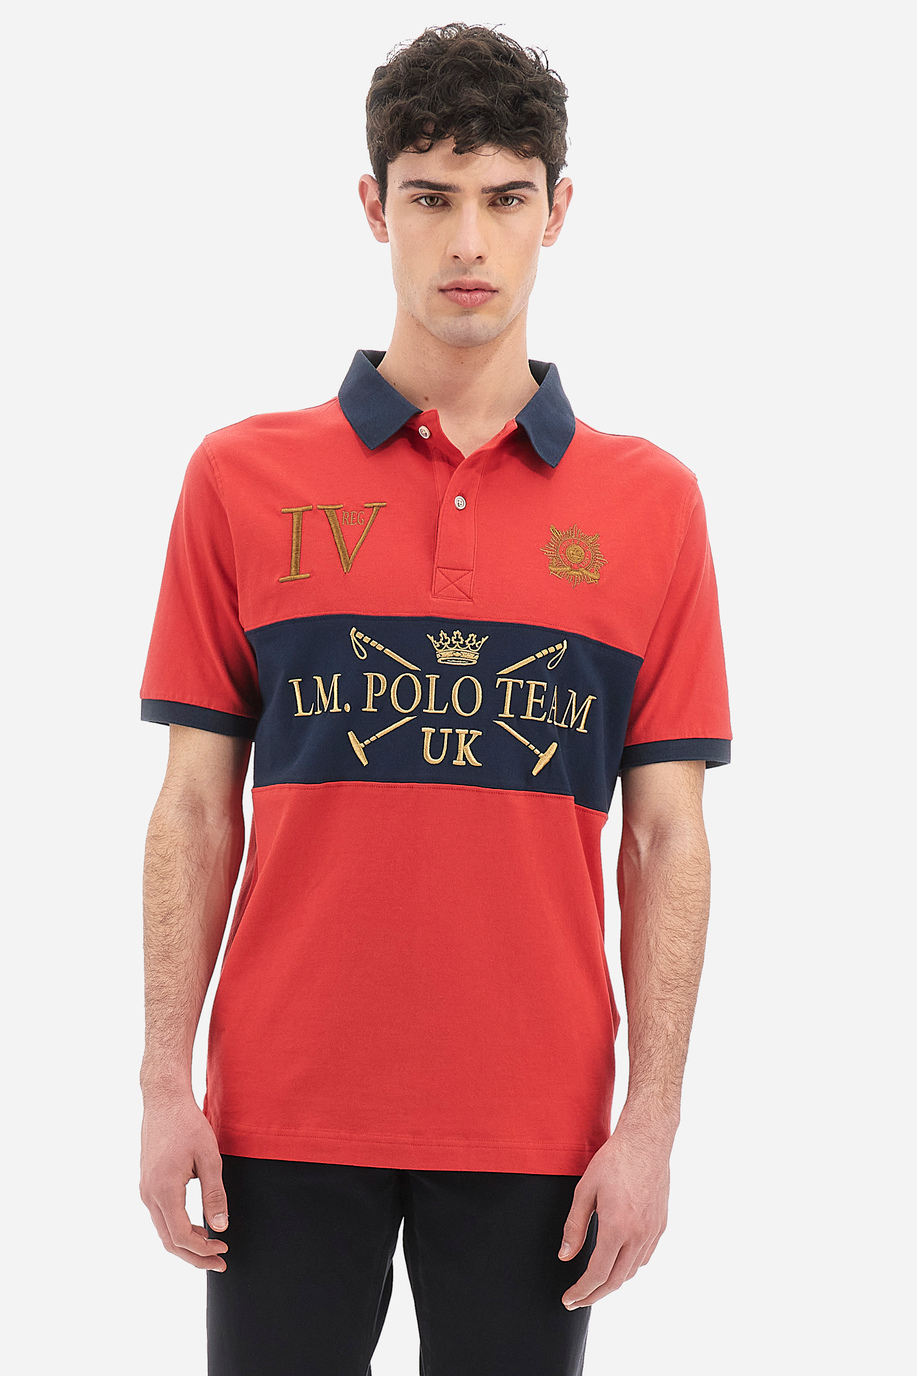 Men's short-sleeved over-fit cotton blend polo shirt - Vince - Guards - England | La Martina - Official Online Shop